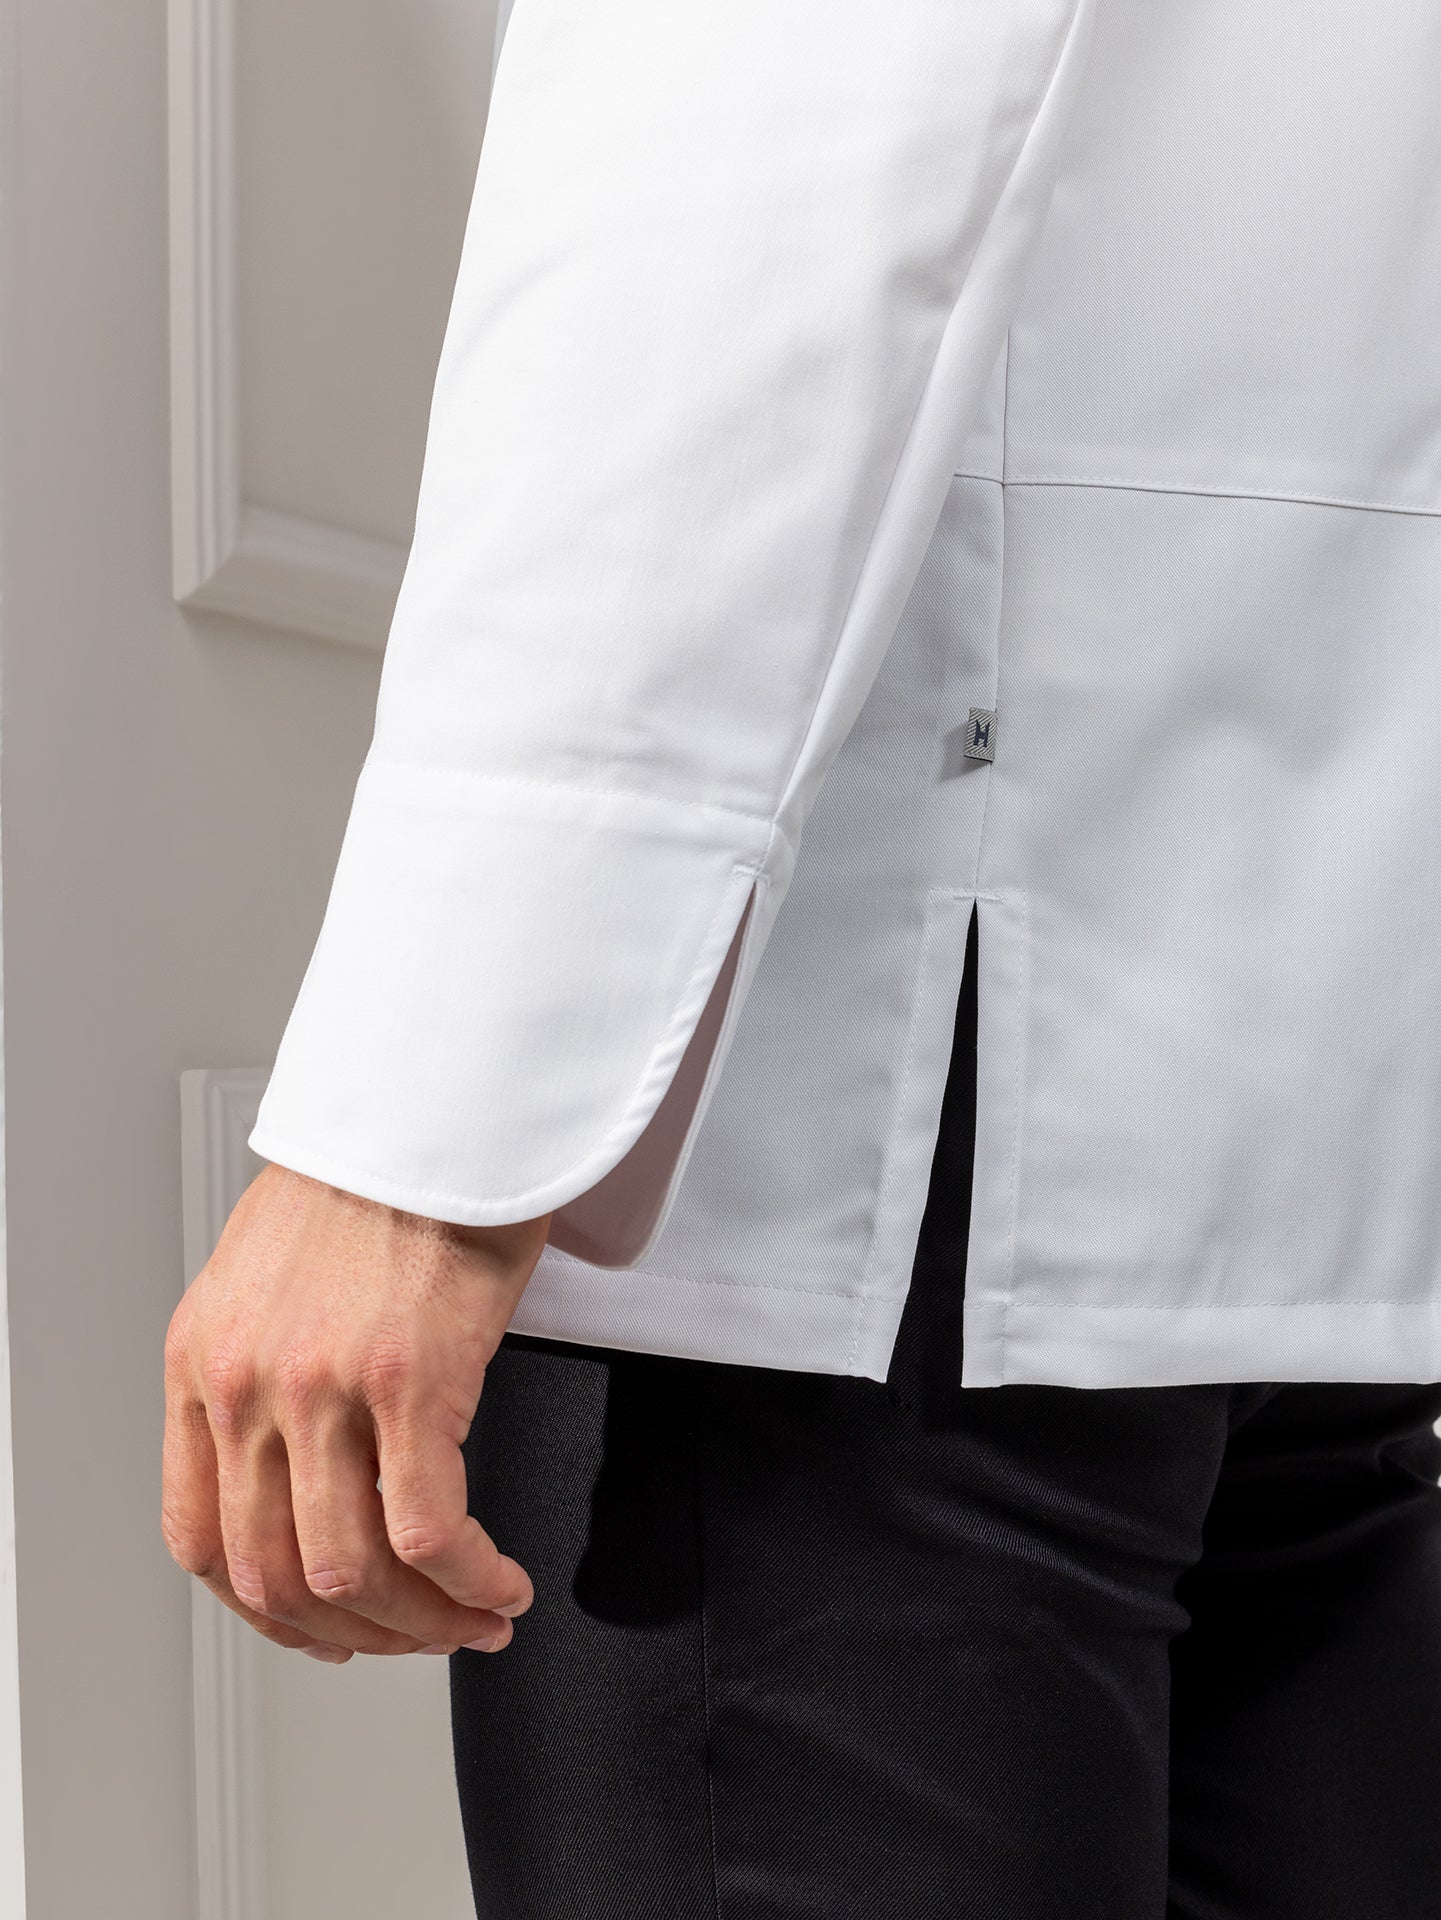 Chef Jacket Dave White by Le Nouveau Chef